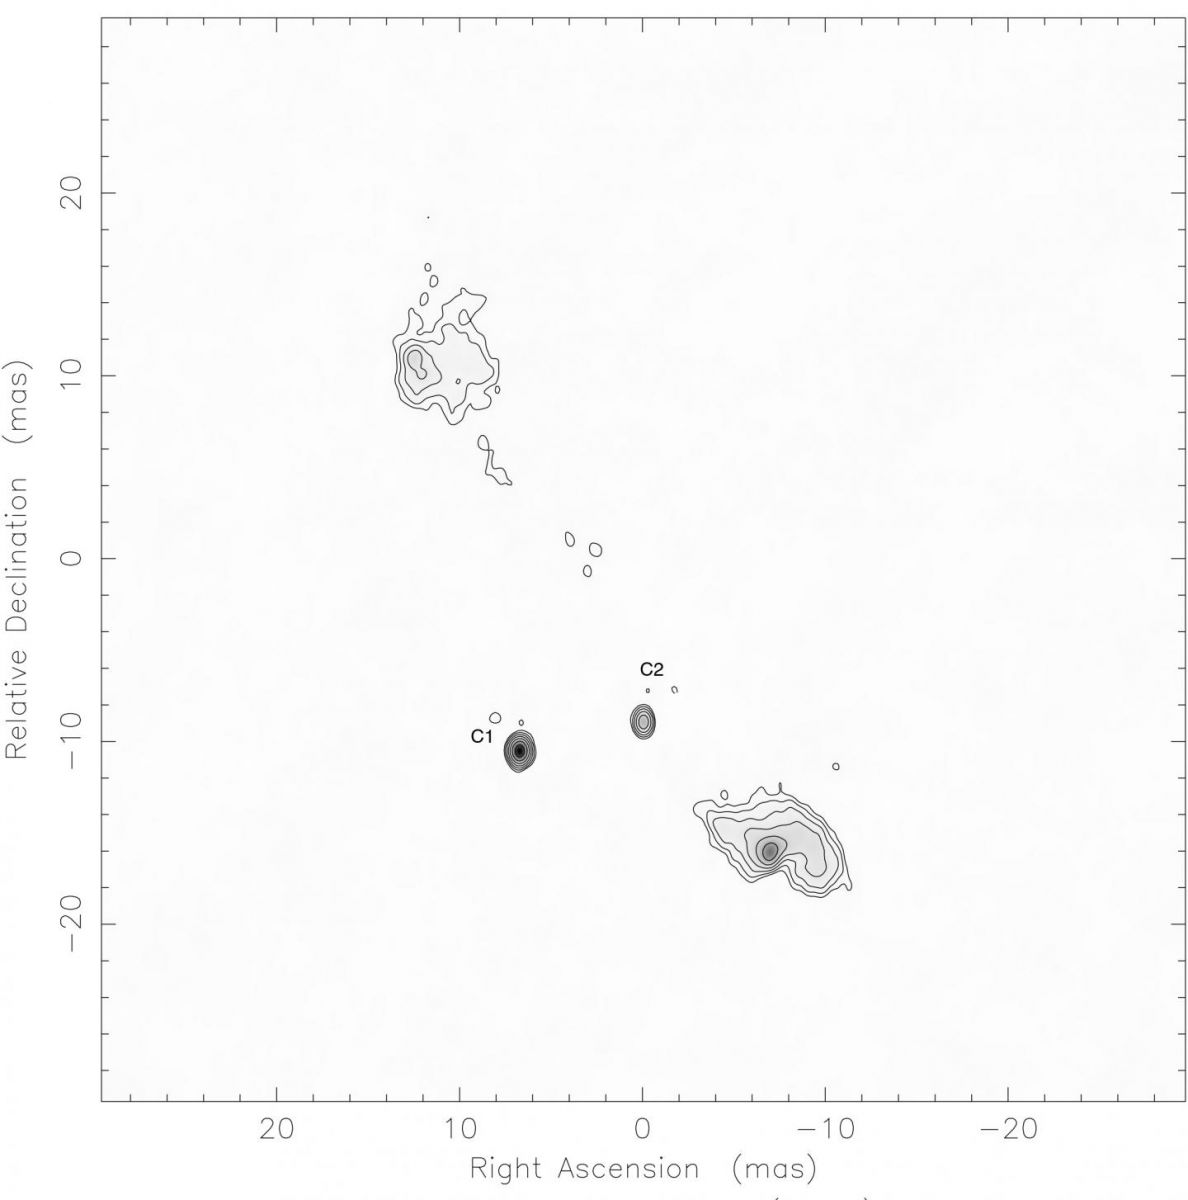 VLBA map of radio galaxy 0402+379 at 15 GHz